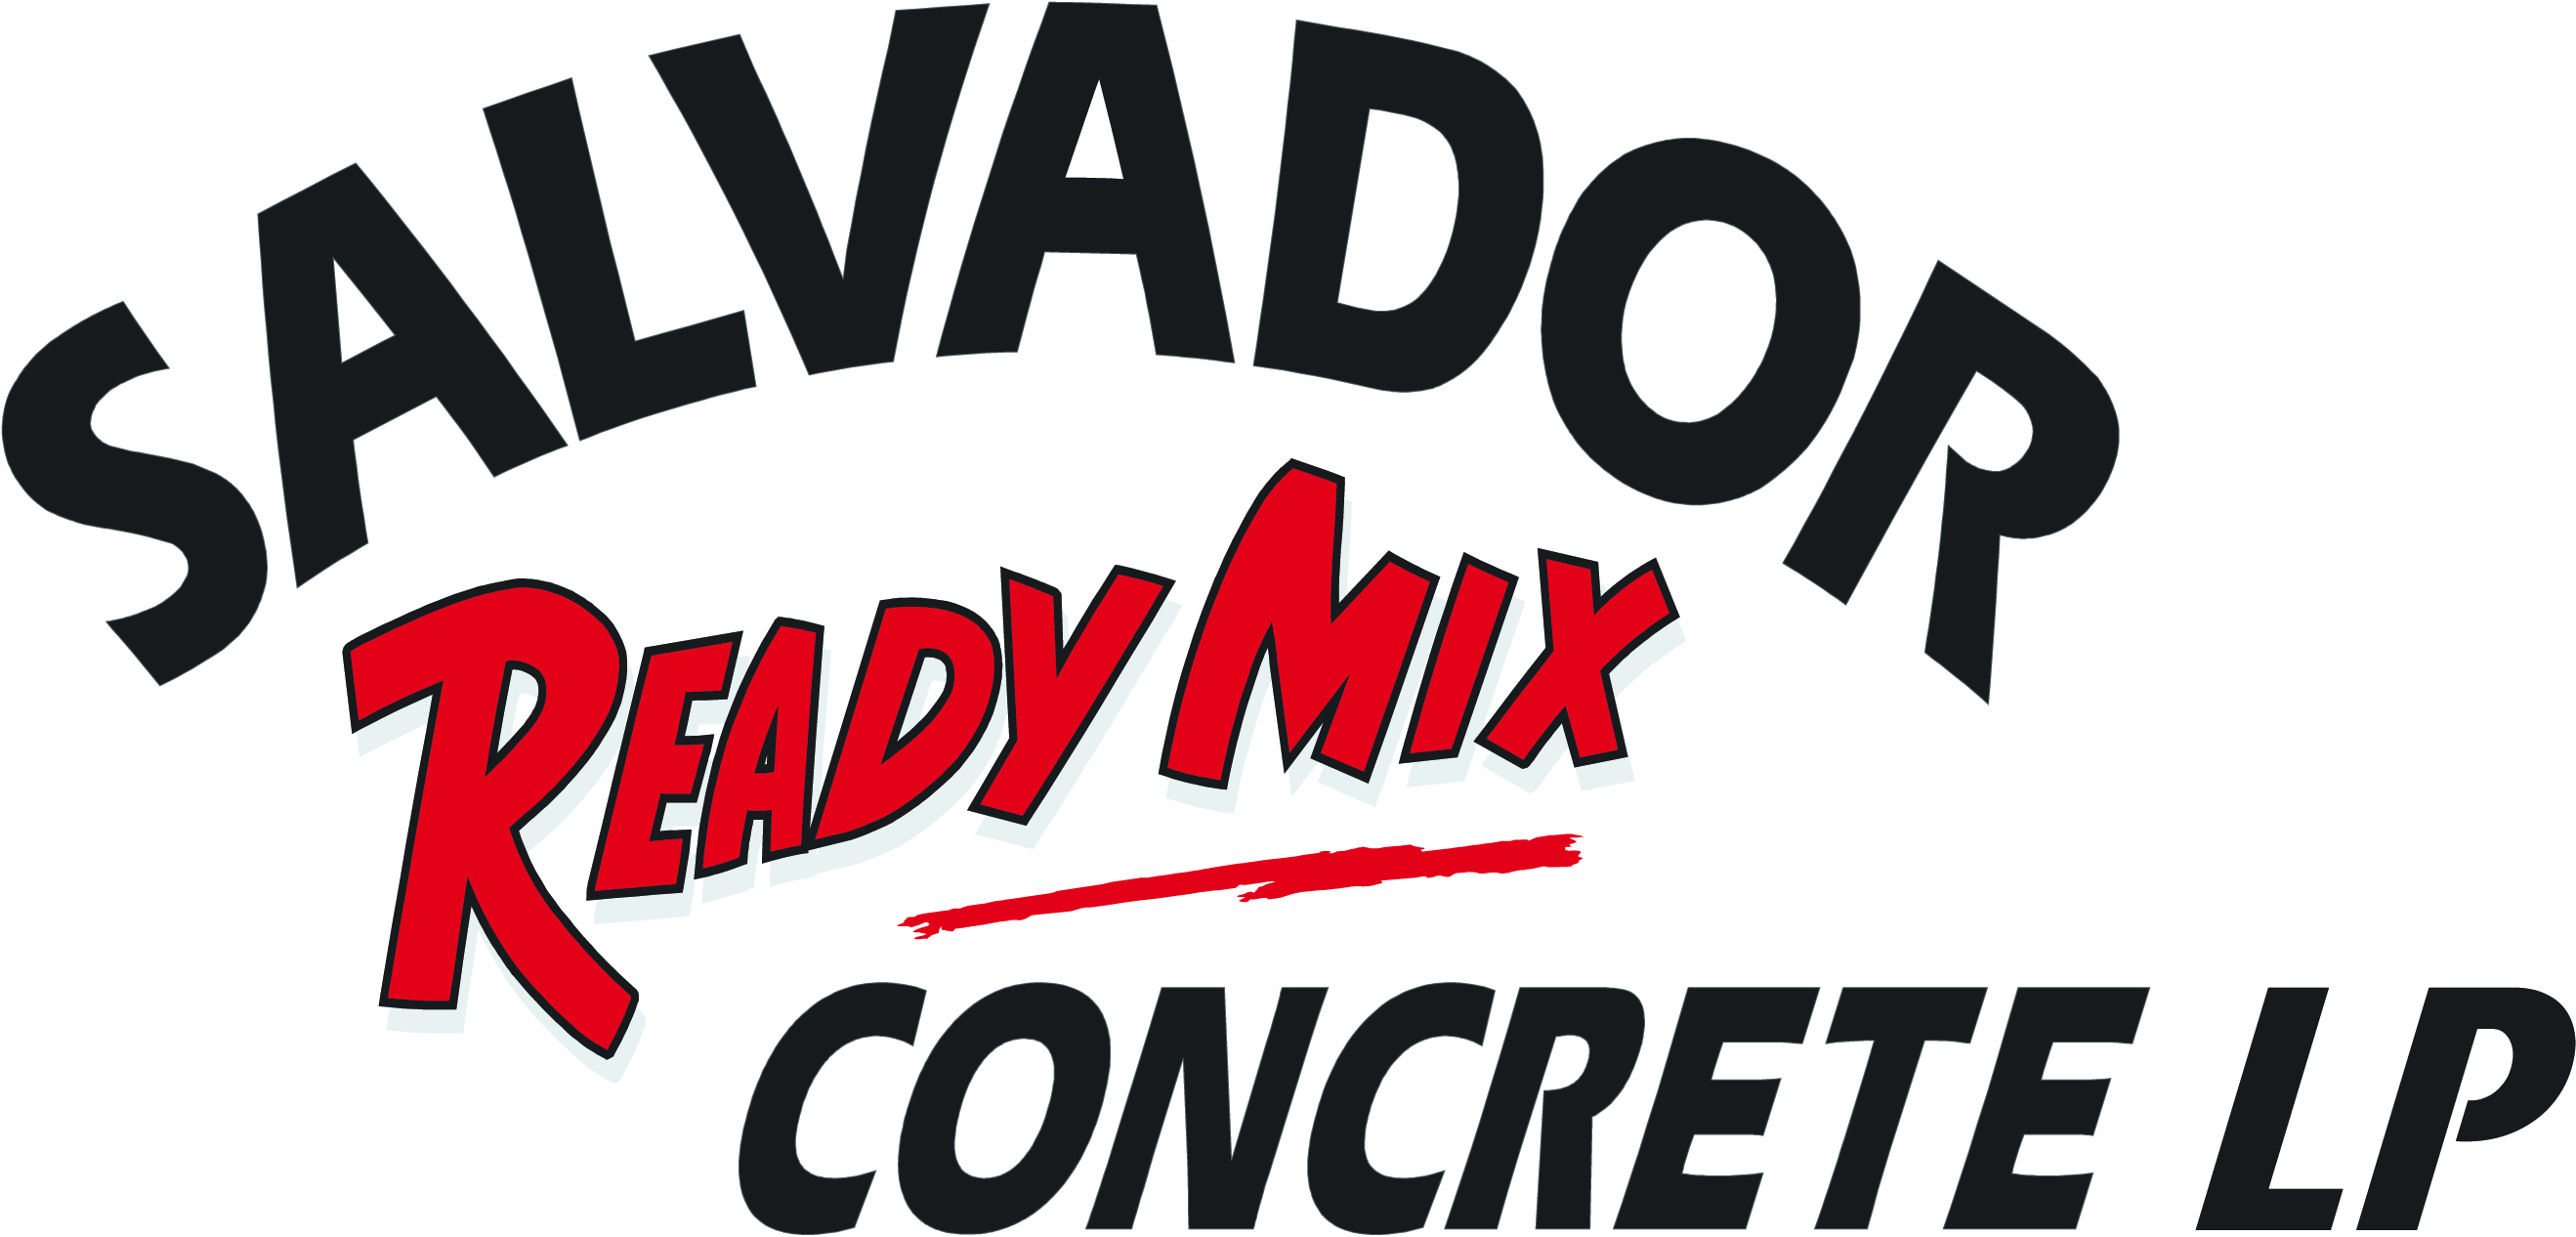 Salvador Ready Mix Concrete launches a new web presence